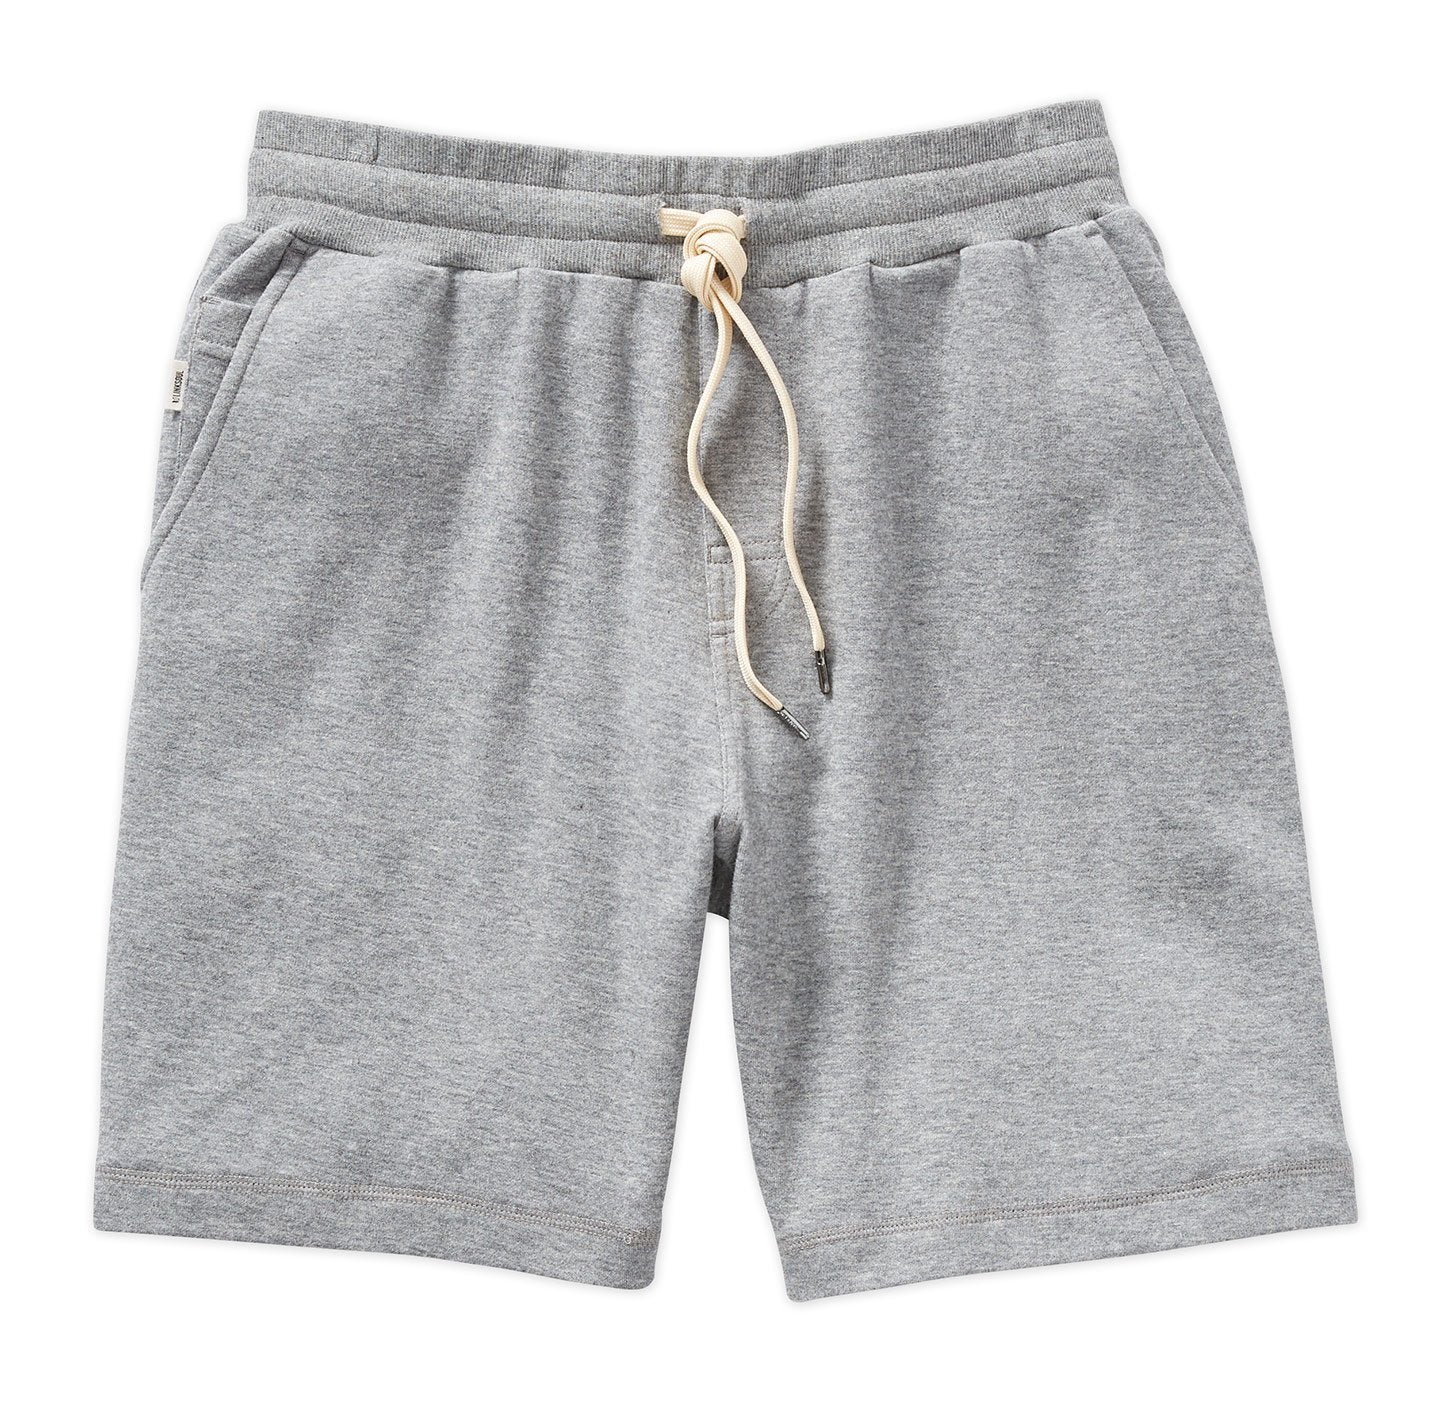 Men's Shorts - LINKSOUL